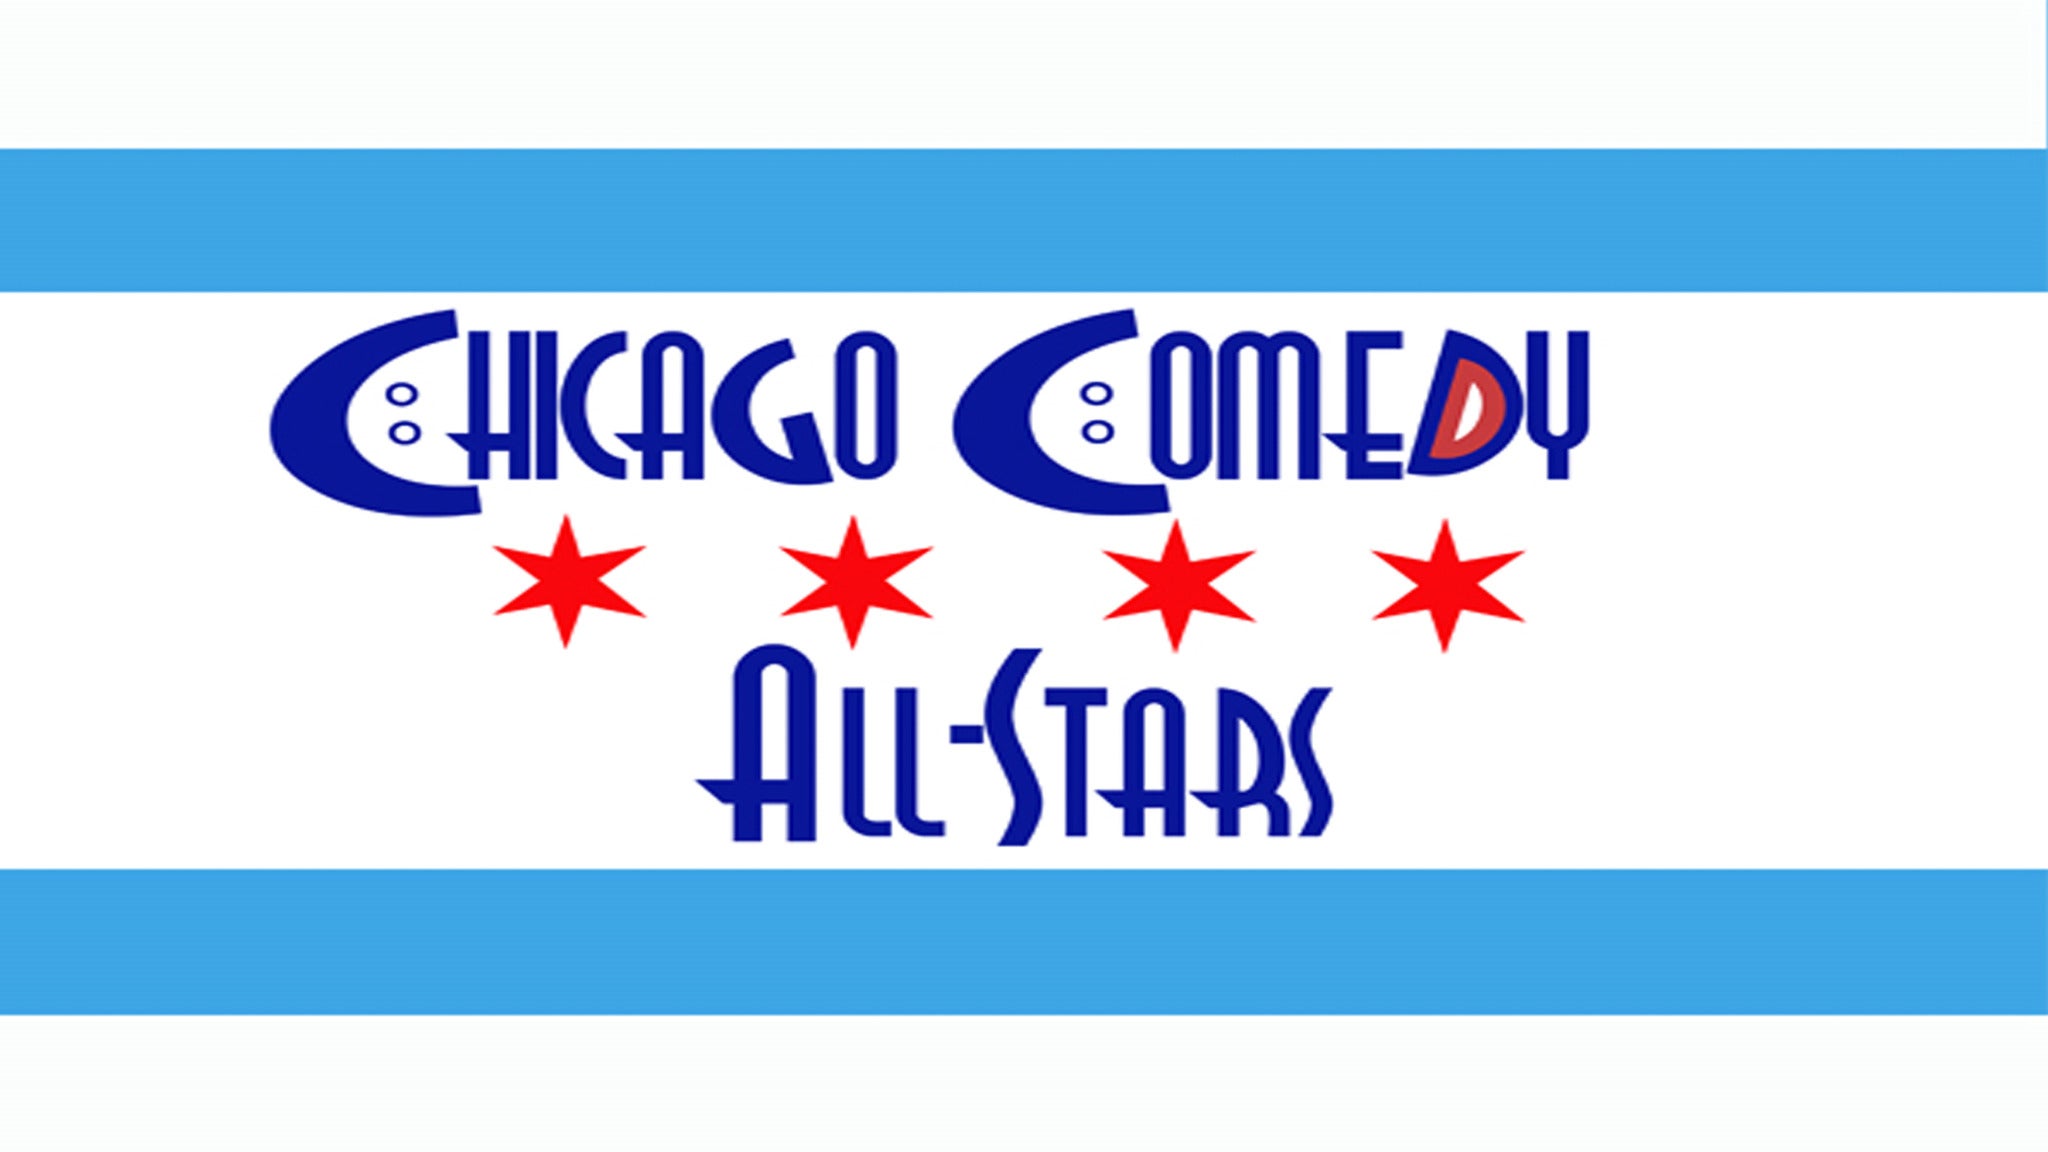 Chicago Comedy All Stars presale password